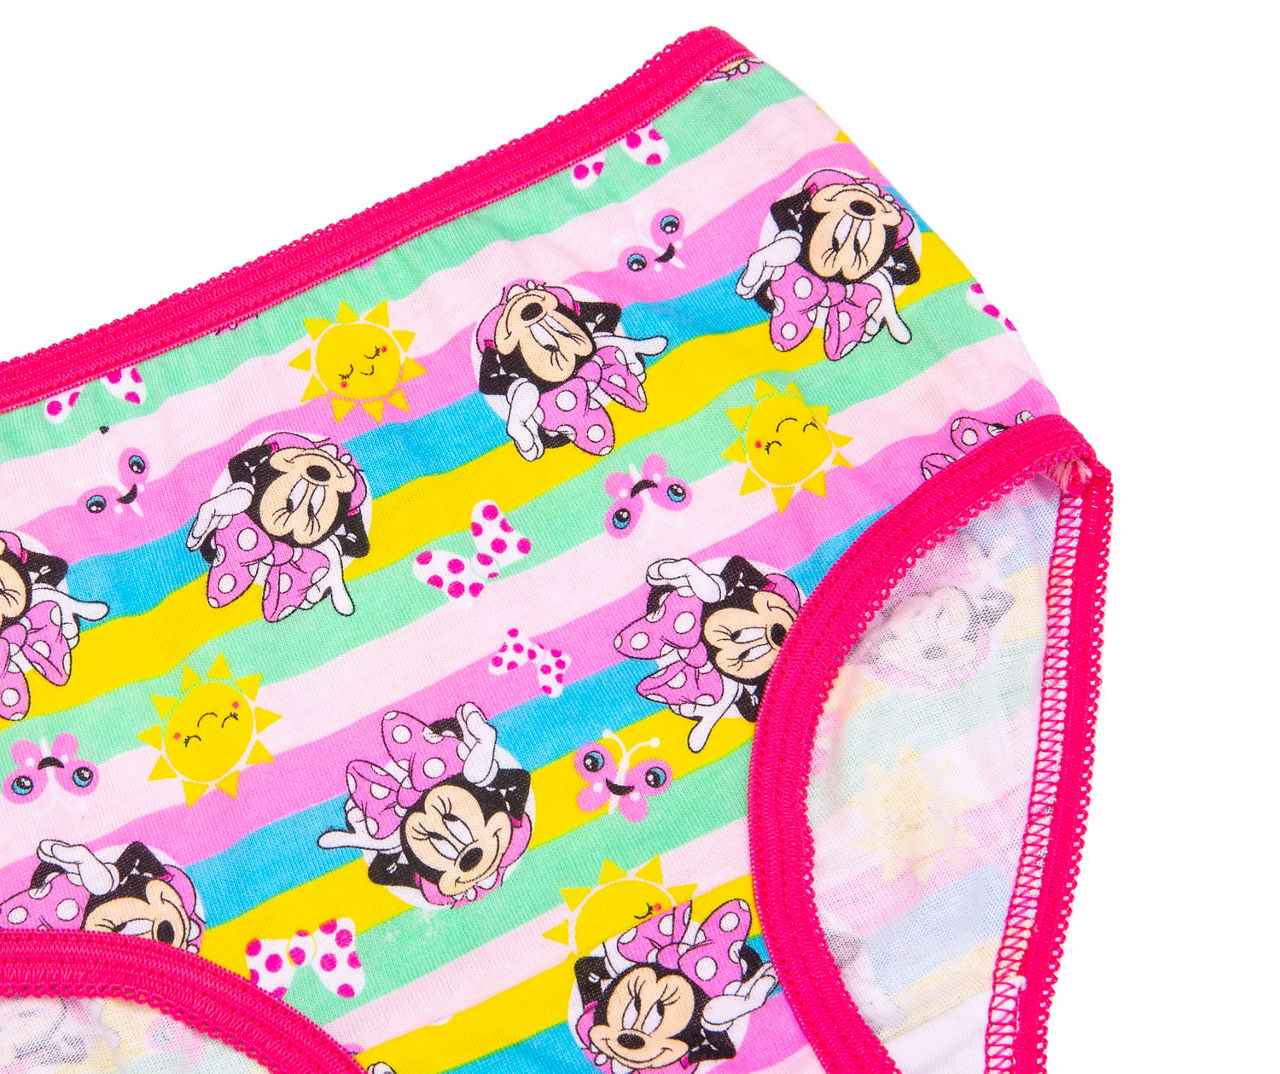 Lot of 3 New Basics Toddler Girls 5 Pack Brief Underwear Pink/Purple/Panda  2T/3T